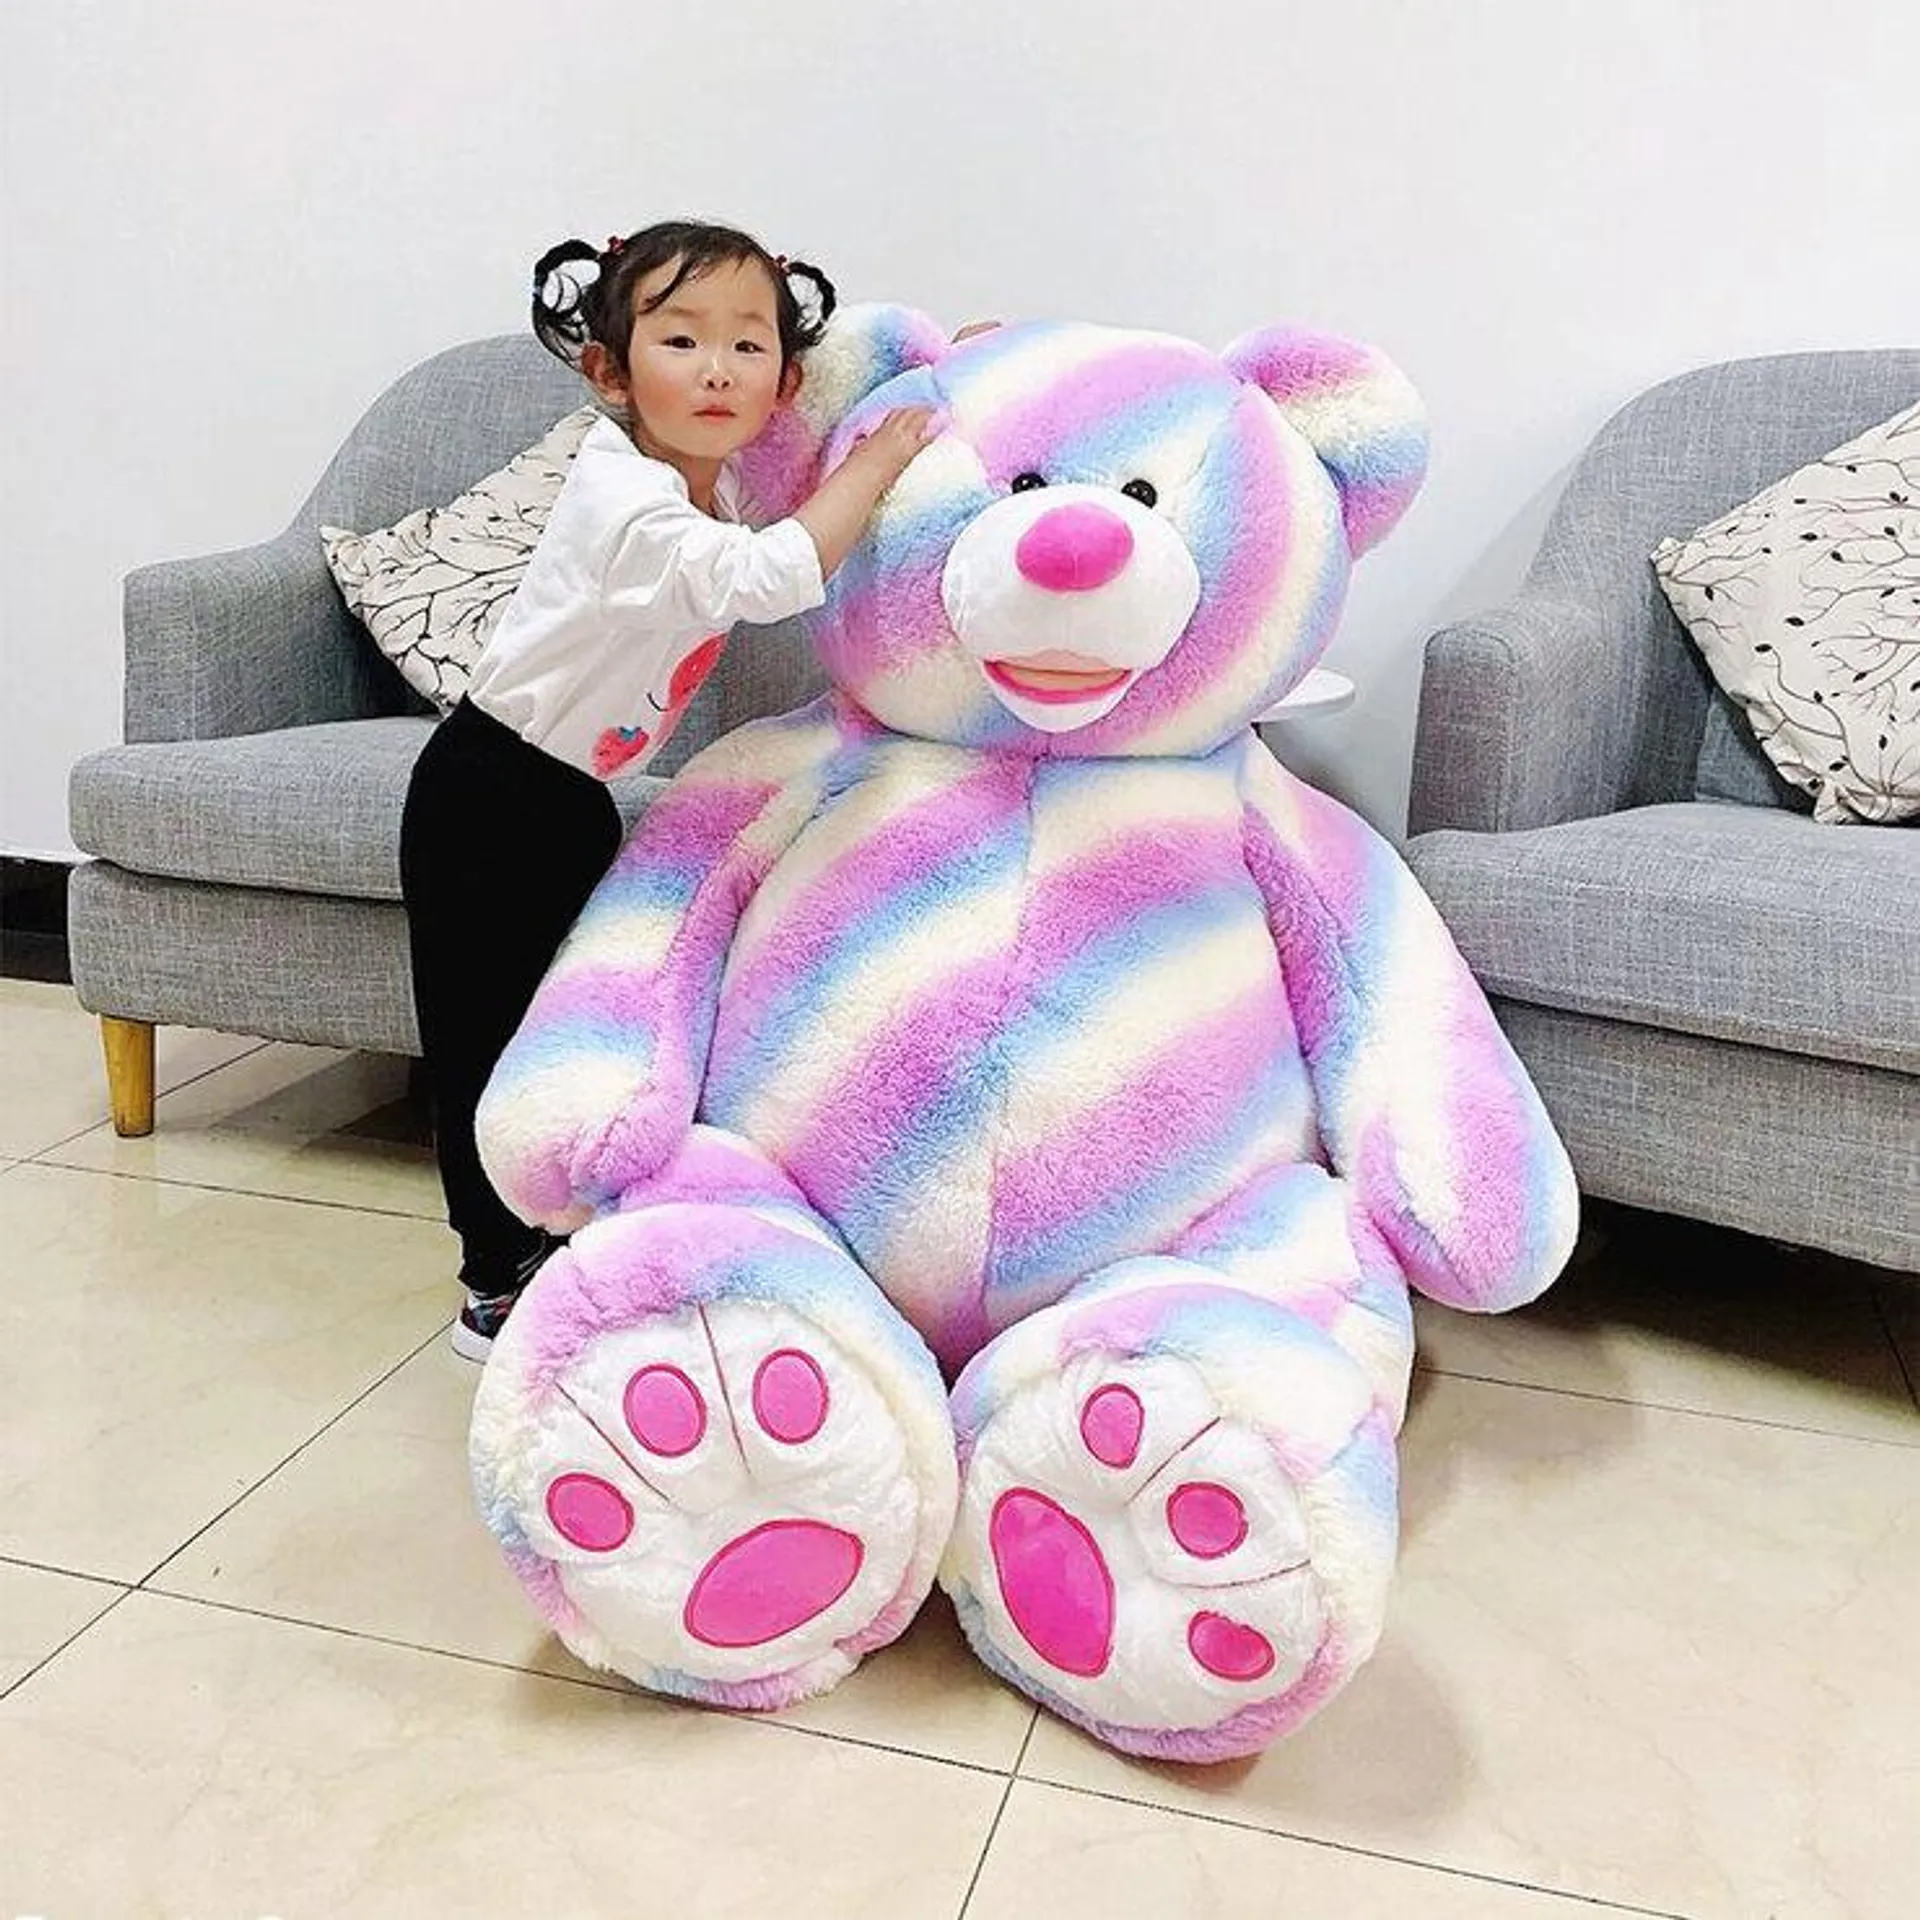 53 Inch (1.3m) Hugfun Plush Rainbow Teddy Bear